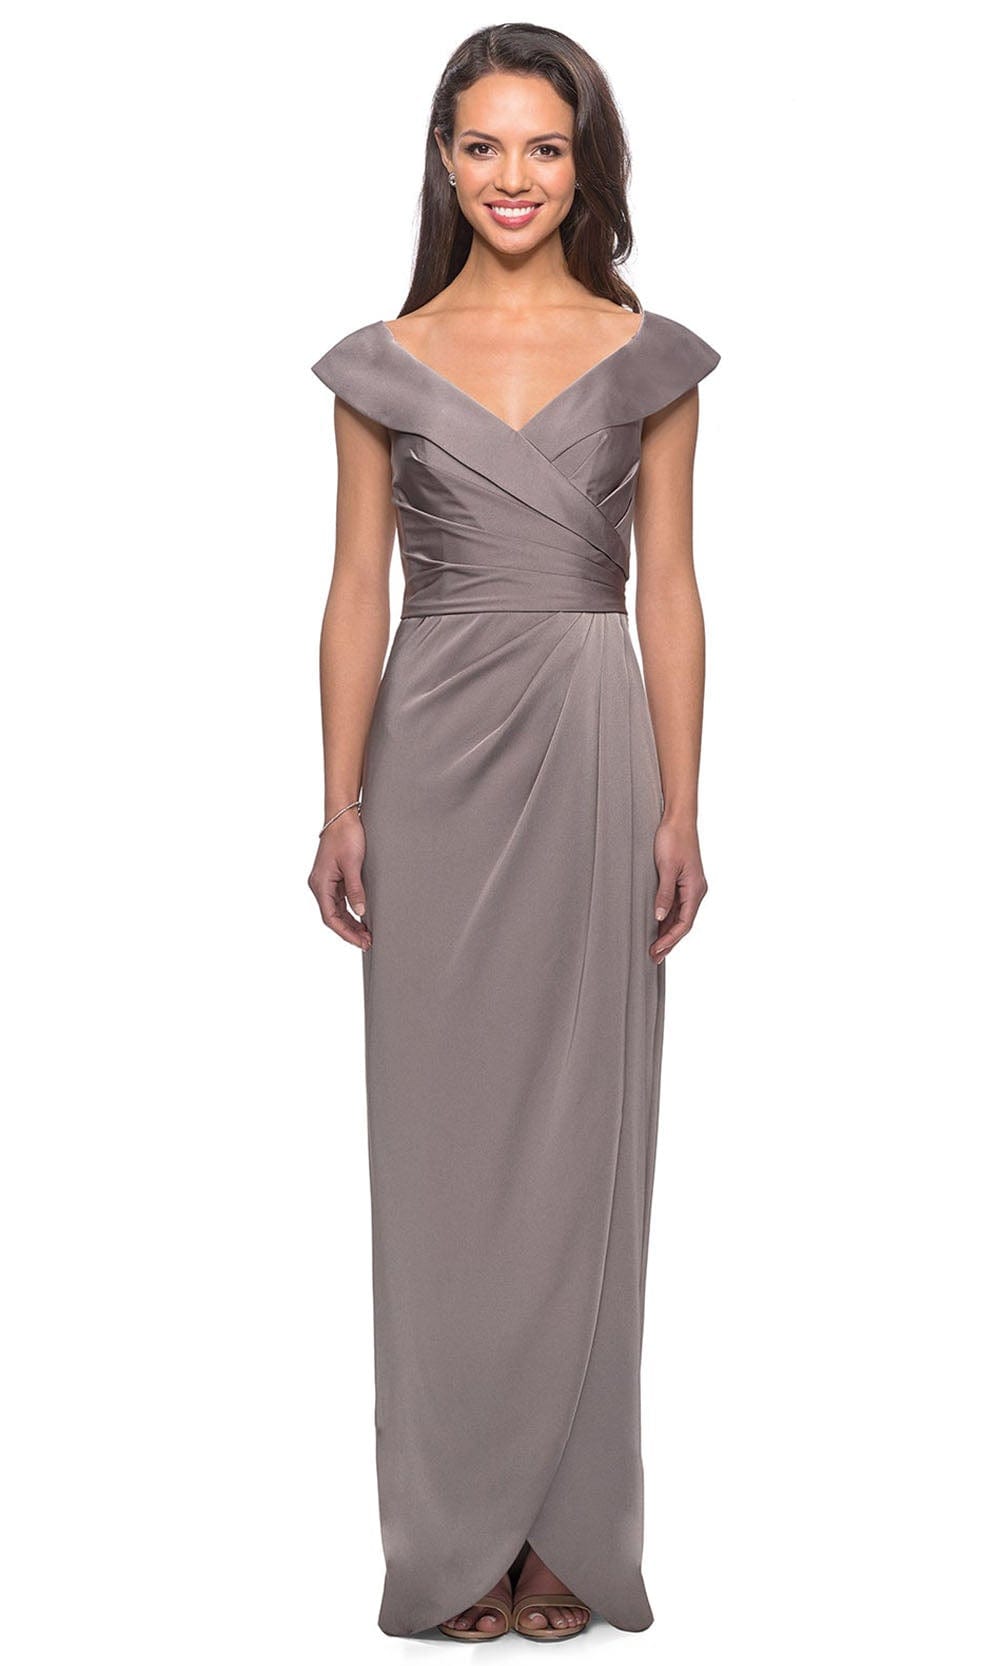 La Femme 25206 - Ruched Cap Sleeved Long Jersey Dress
